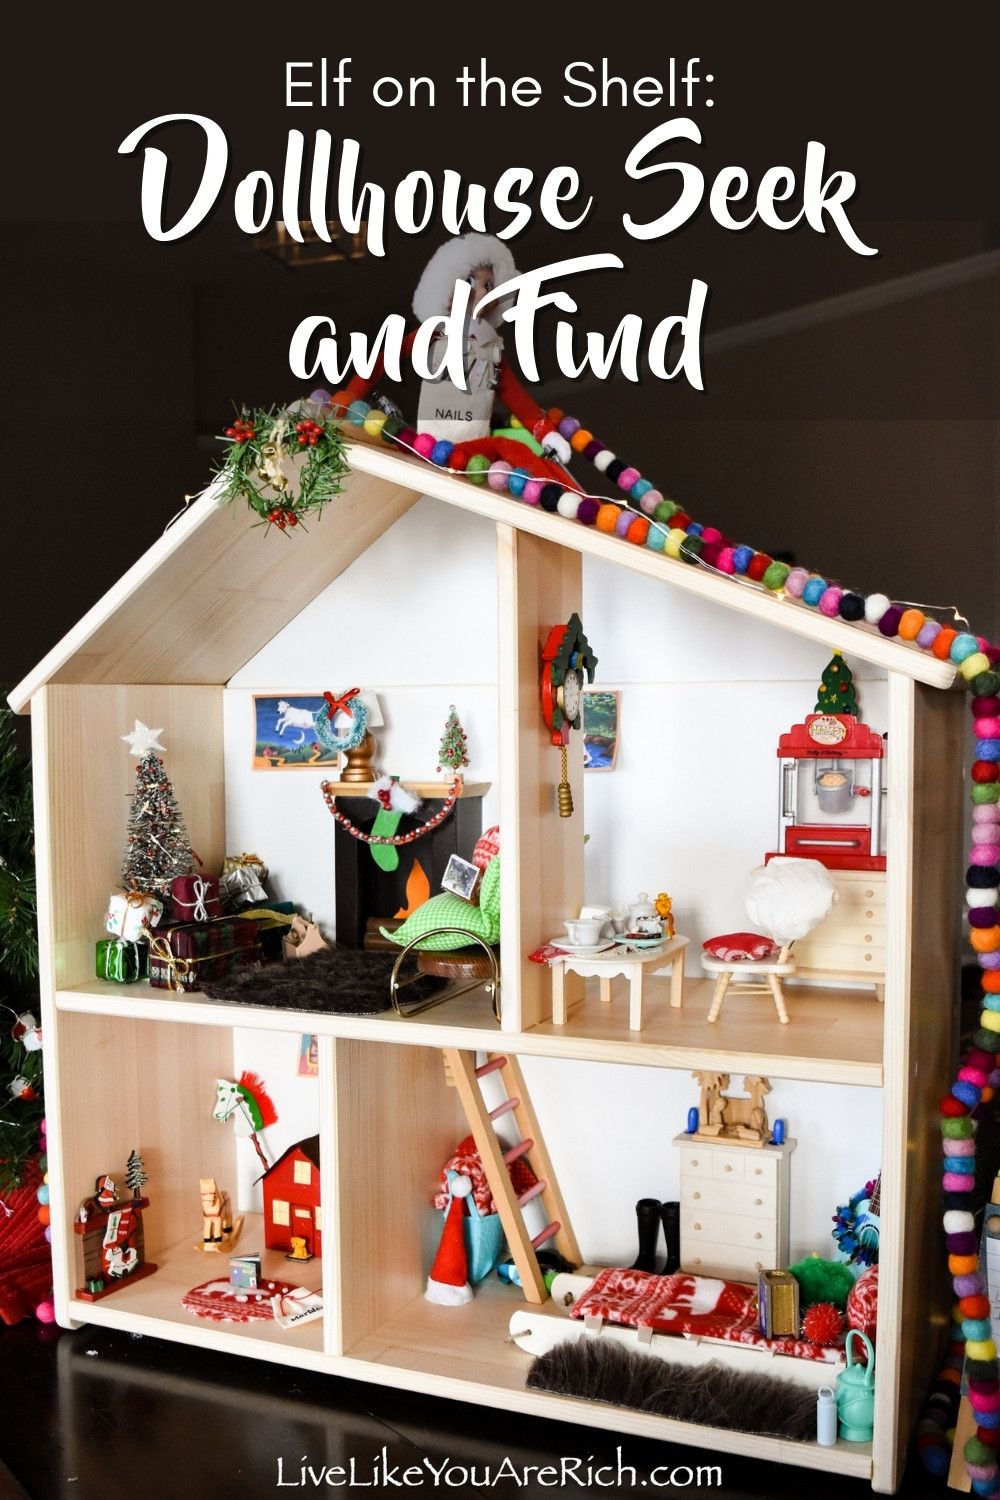 Elf on the Shelf: Dollhouse Seek and Find